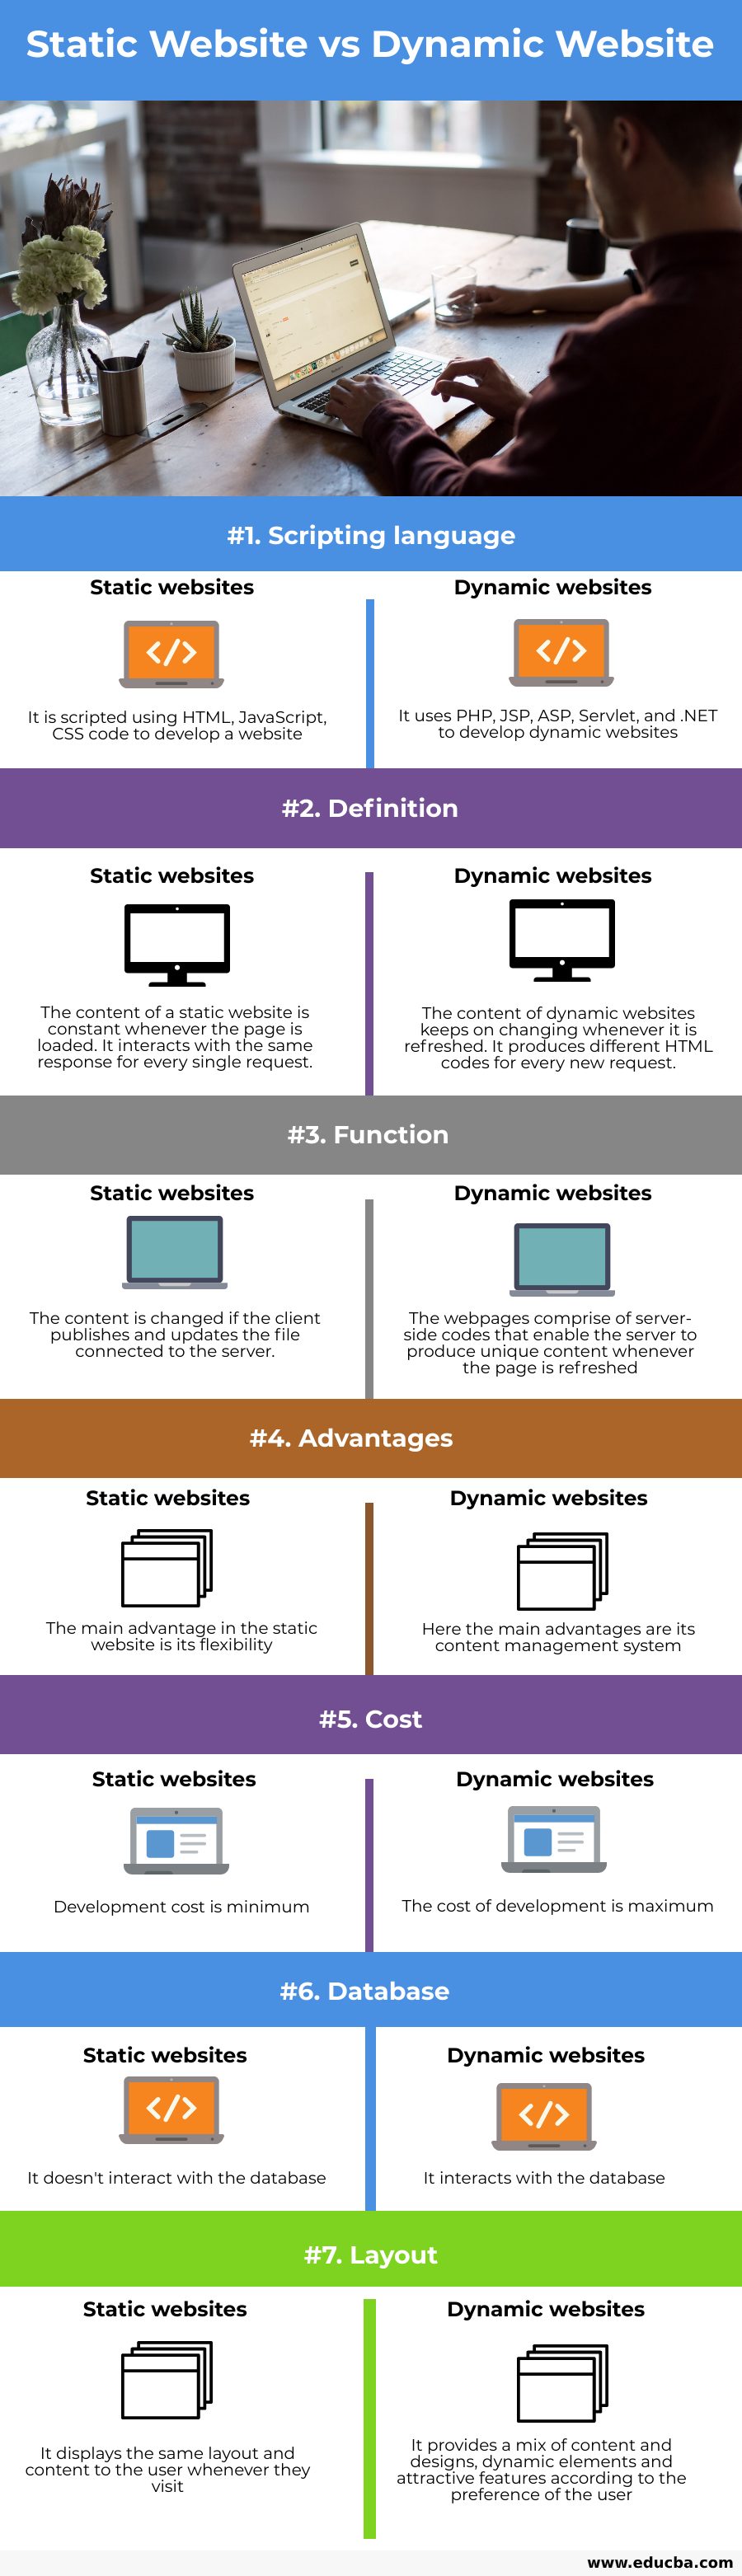 Static Website vs Dynamic Website_info